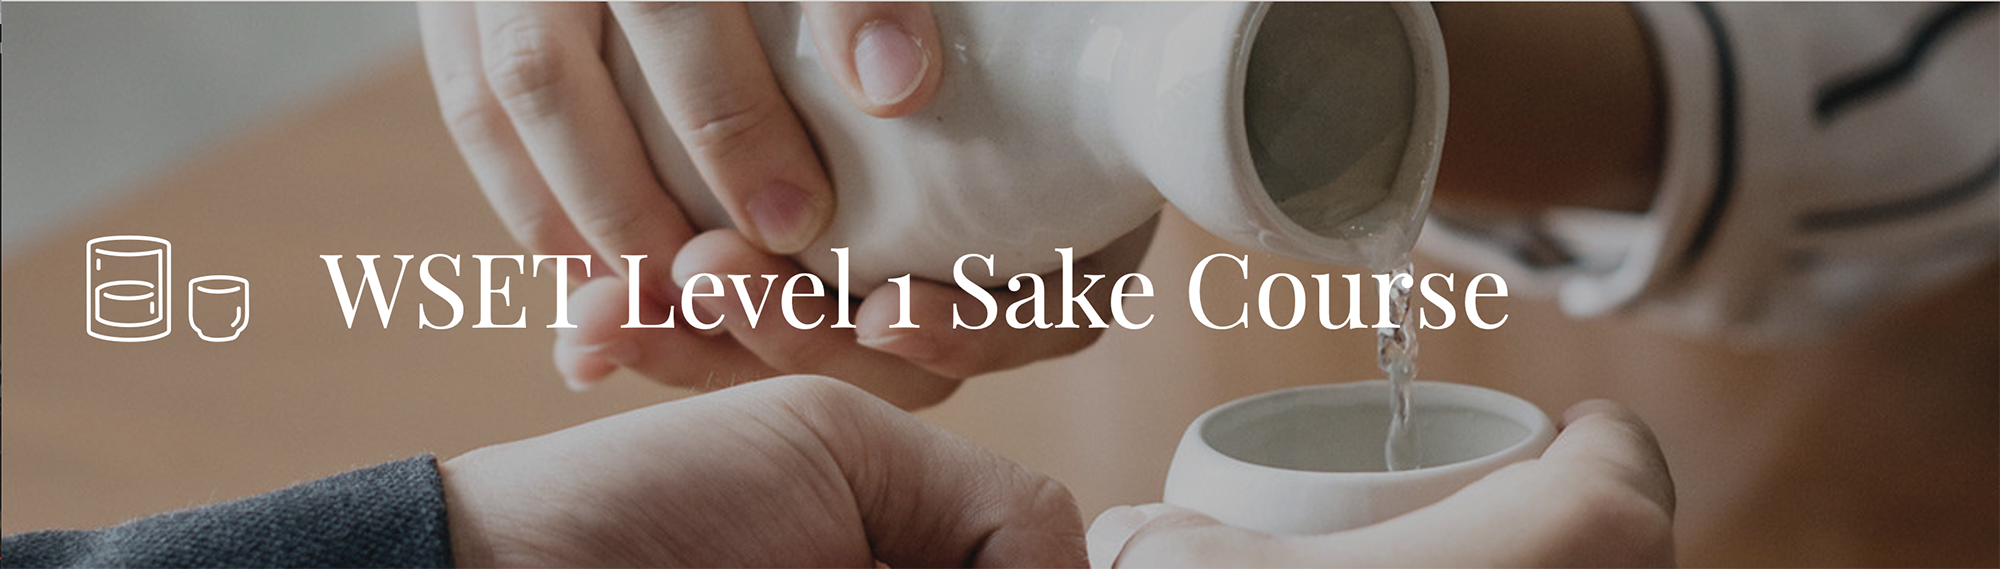 WSET Level 1 Sake Course banner horitzontal